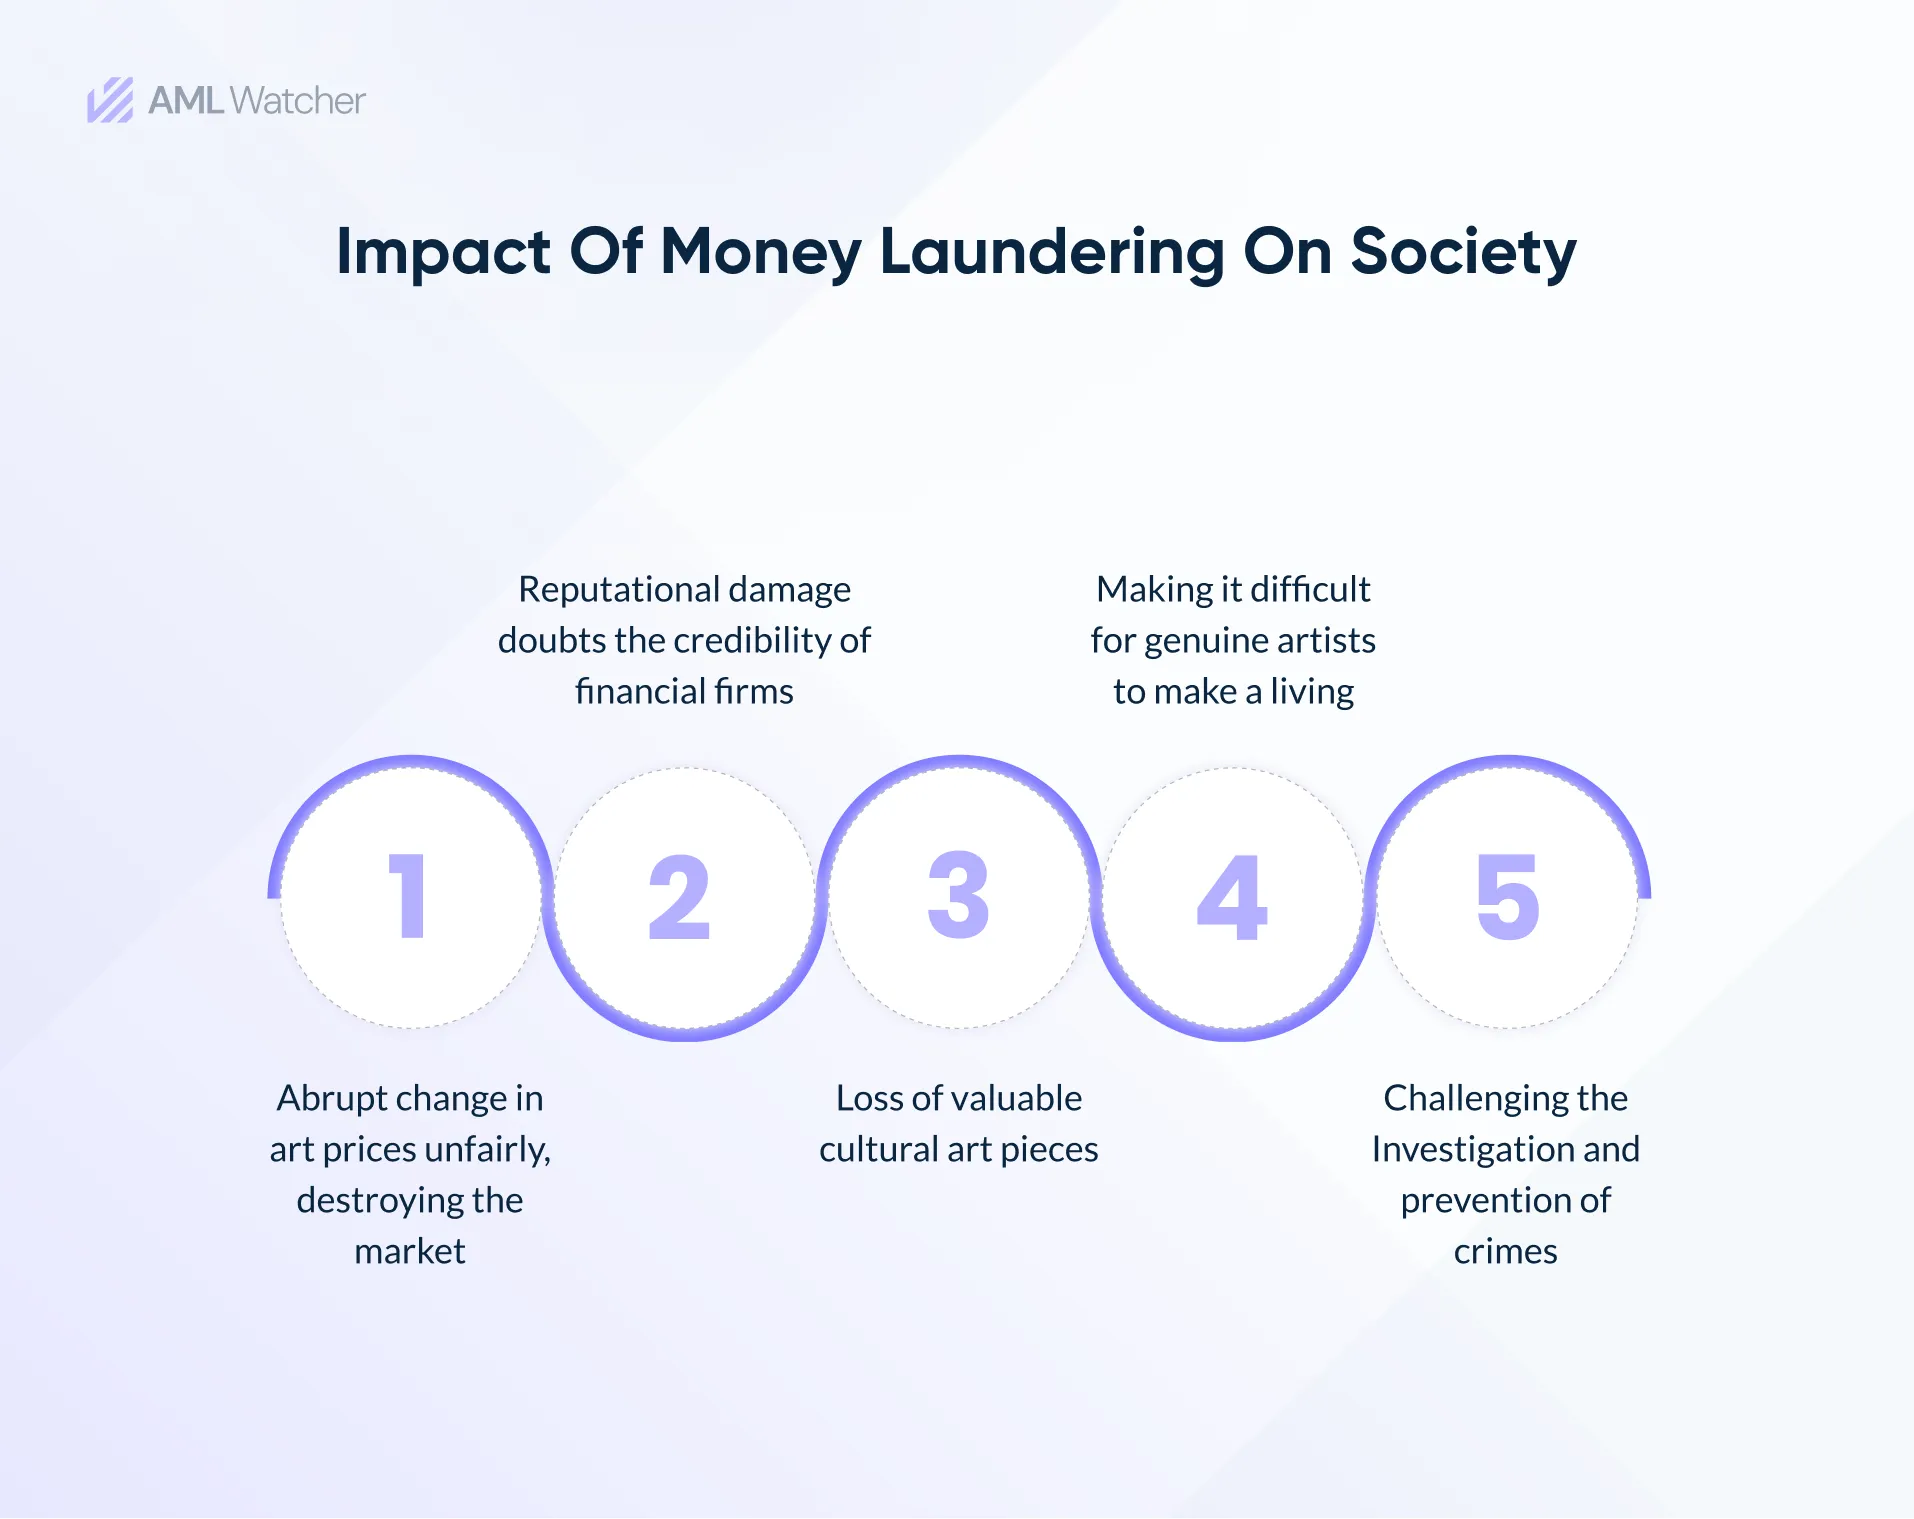 Impact of money laundering on society